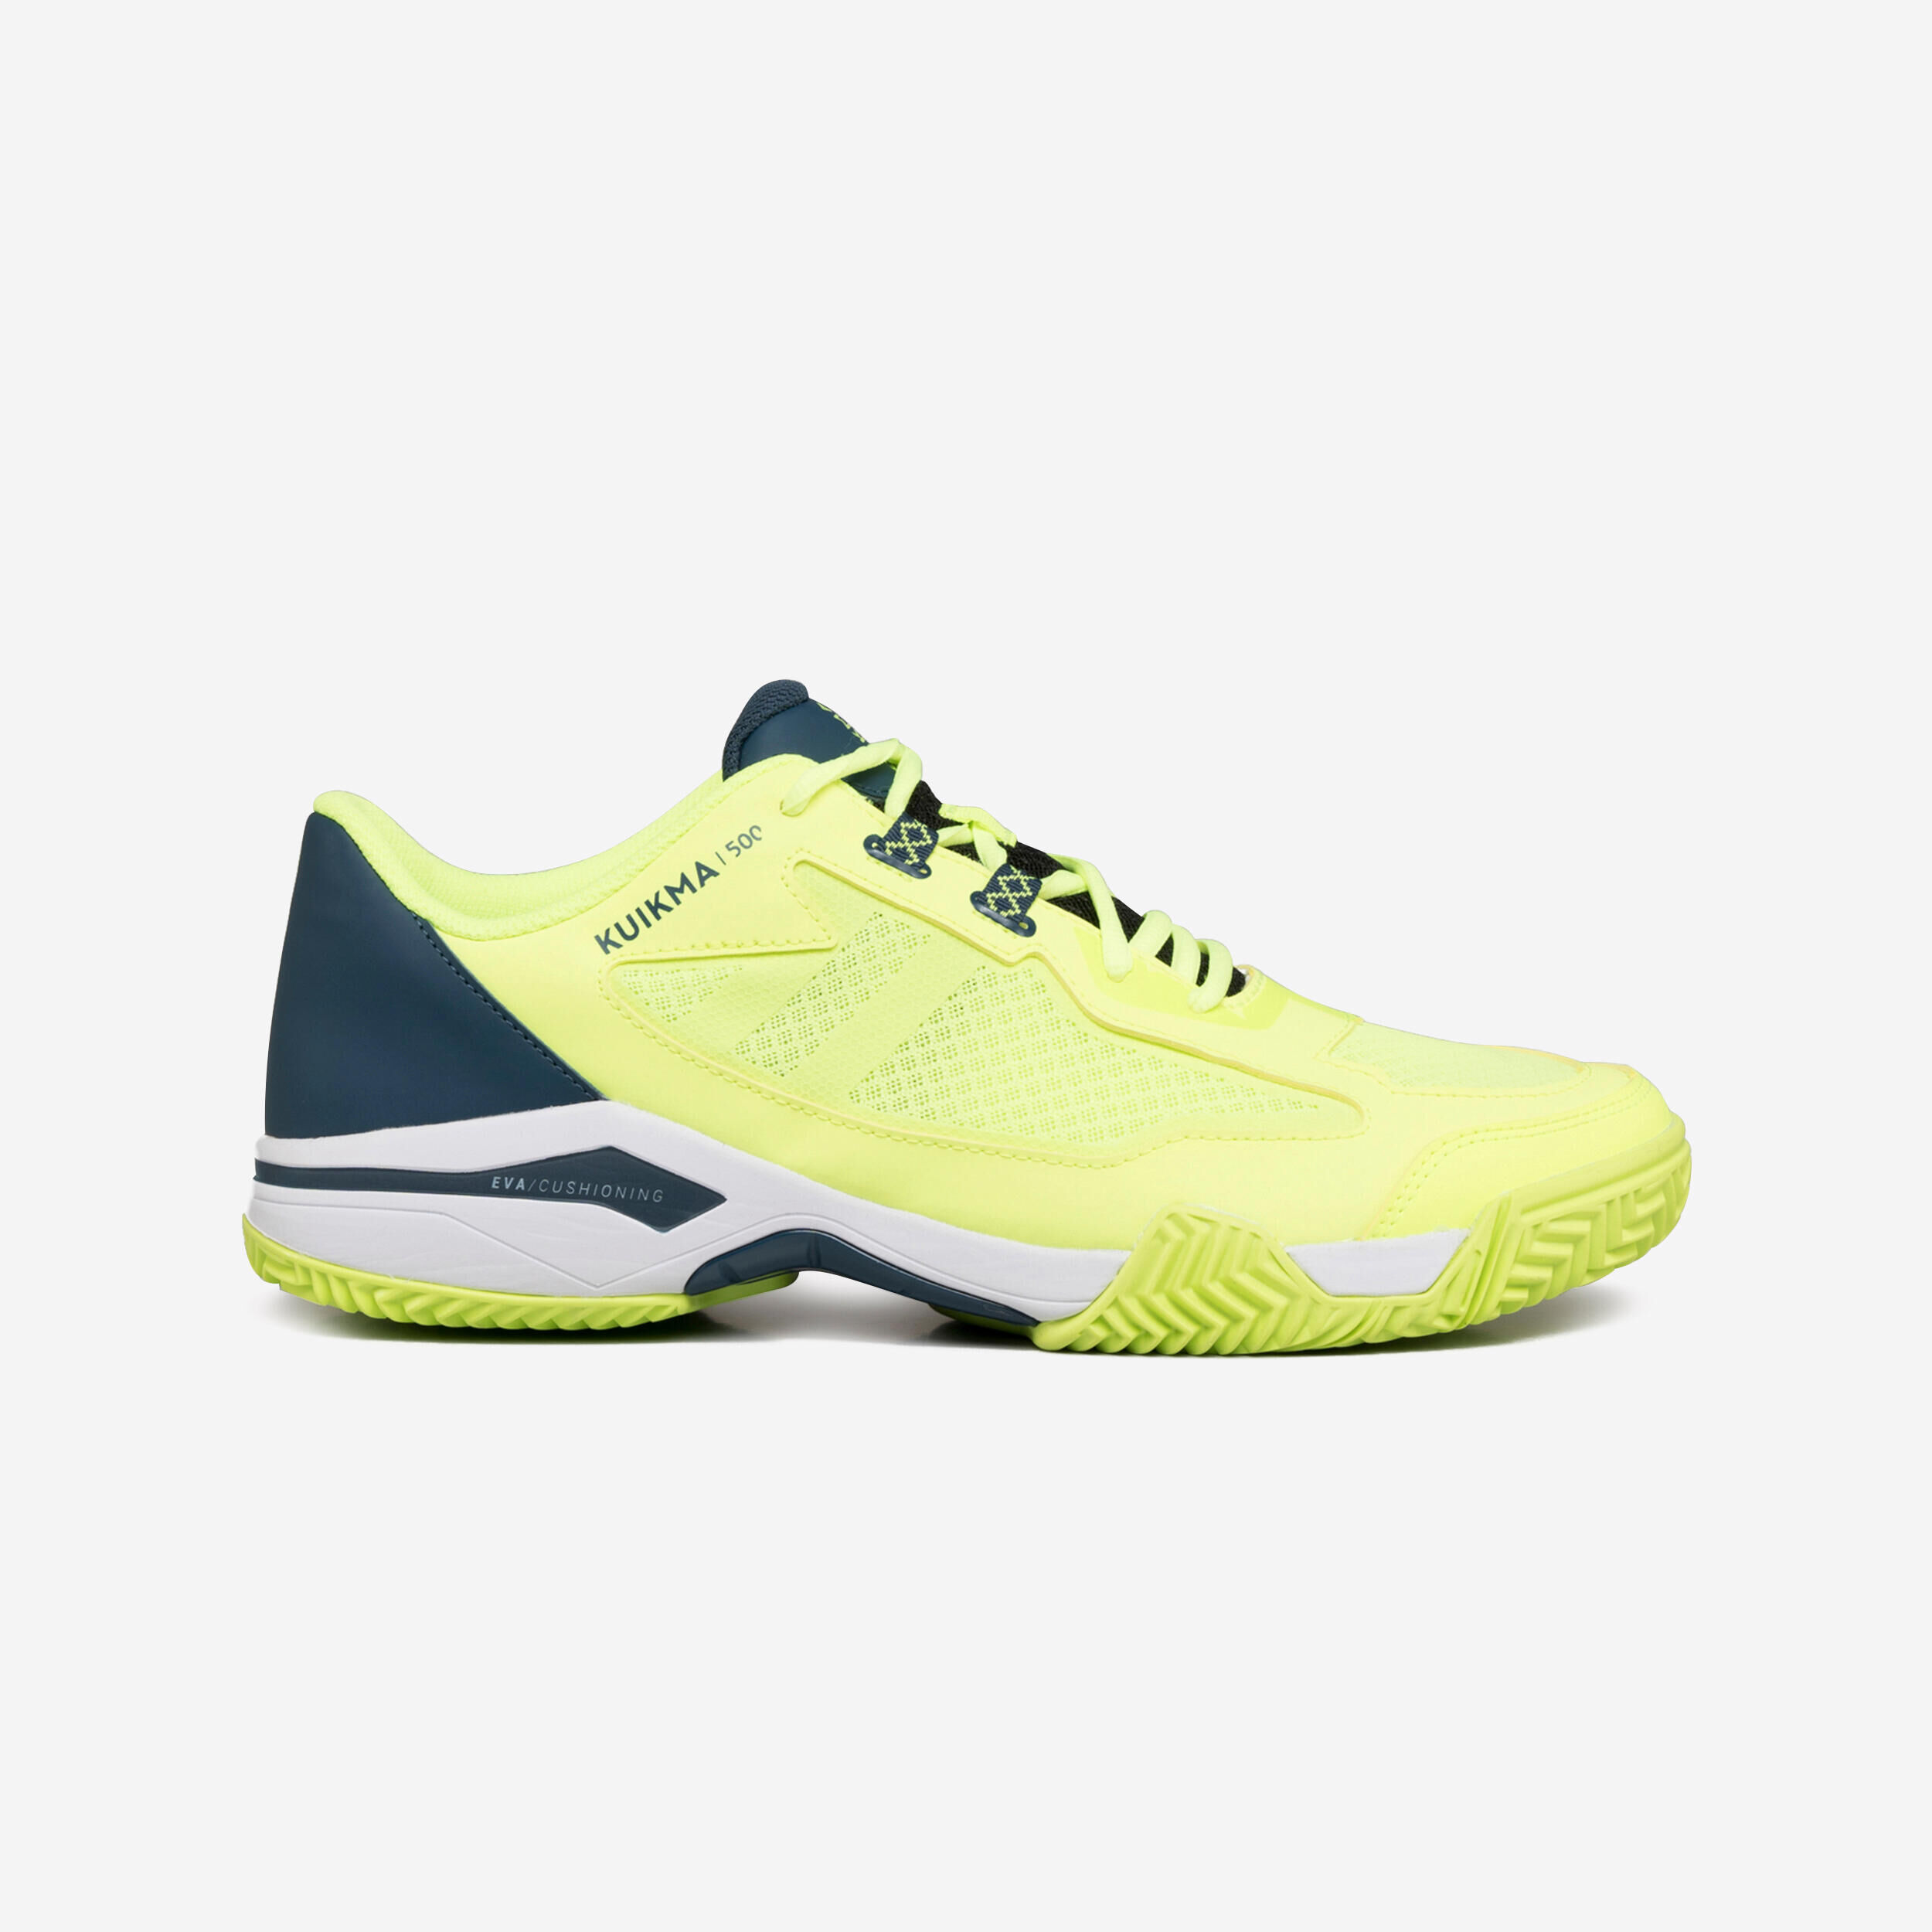 KUIKMA Men's Padel Shoes PS 500 - Yellow